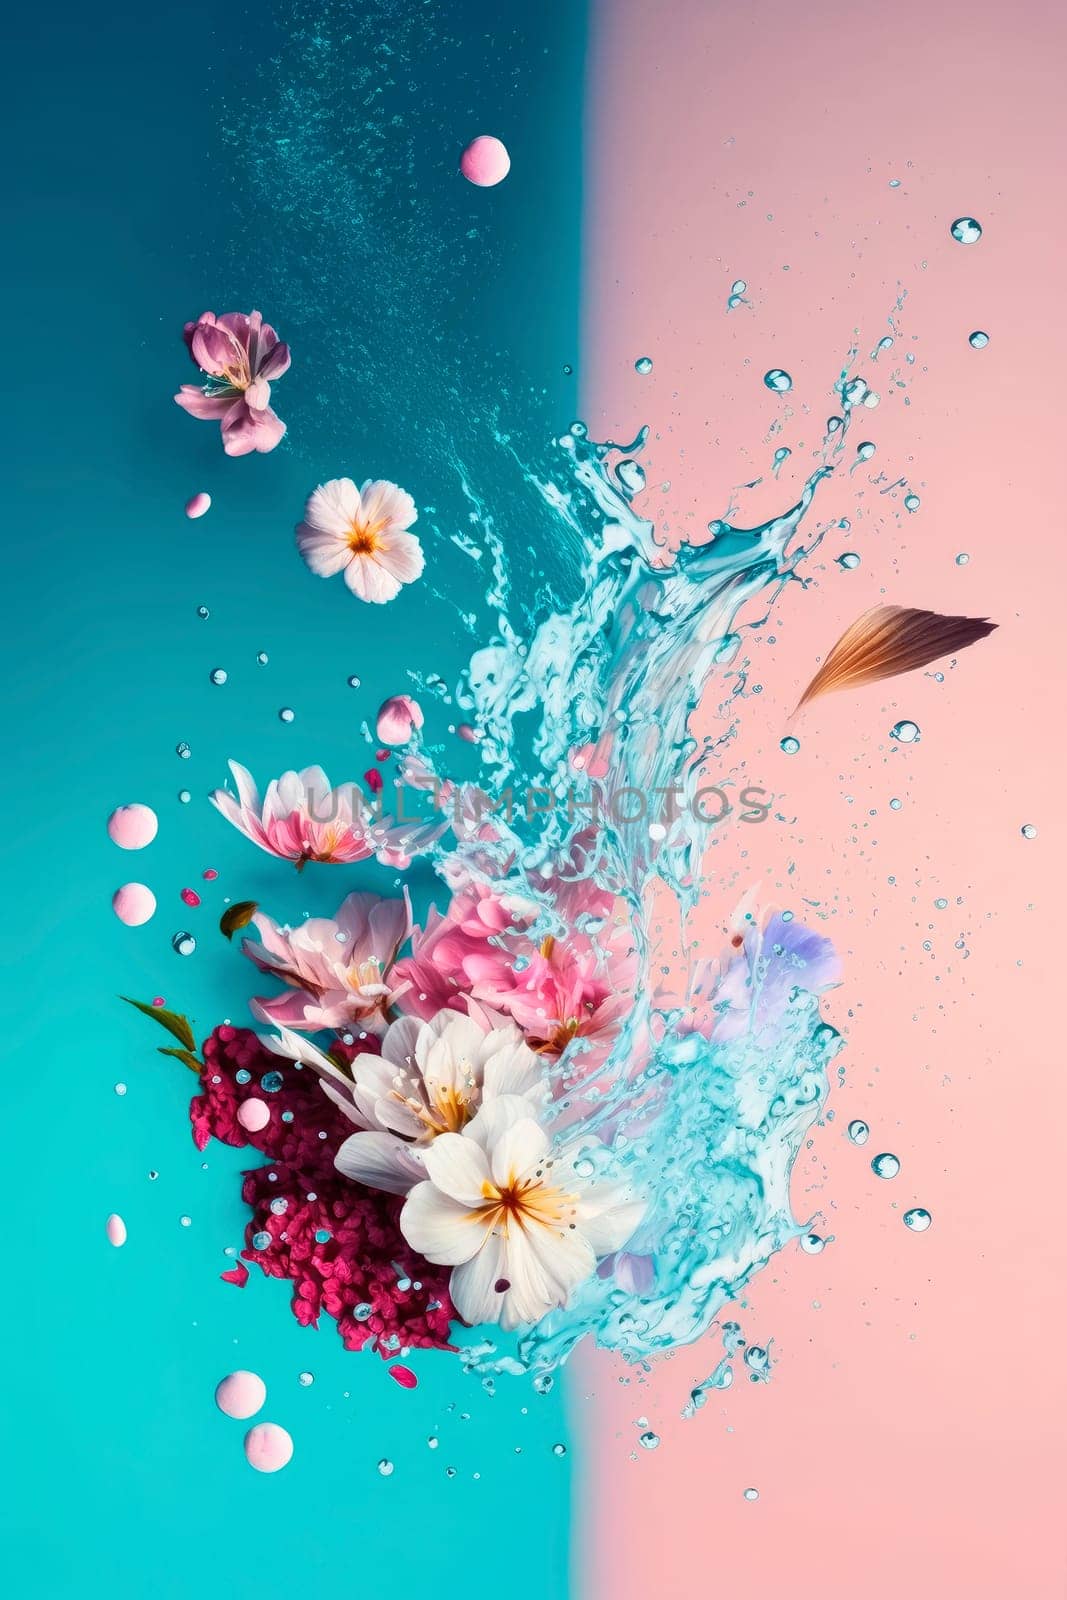 Flowers splash beautiful postcard or place for a subject. by yanadjana